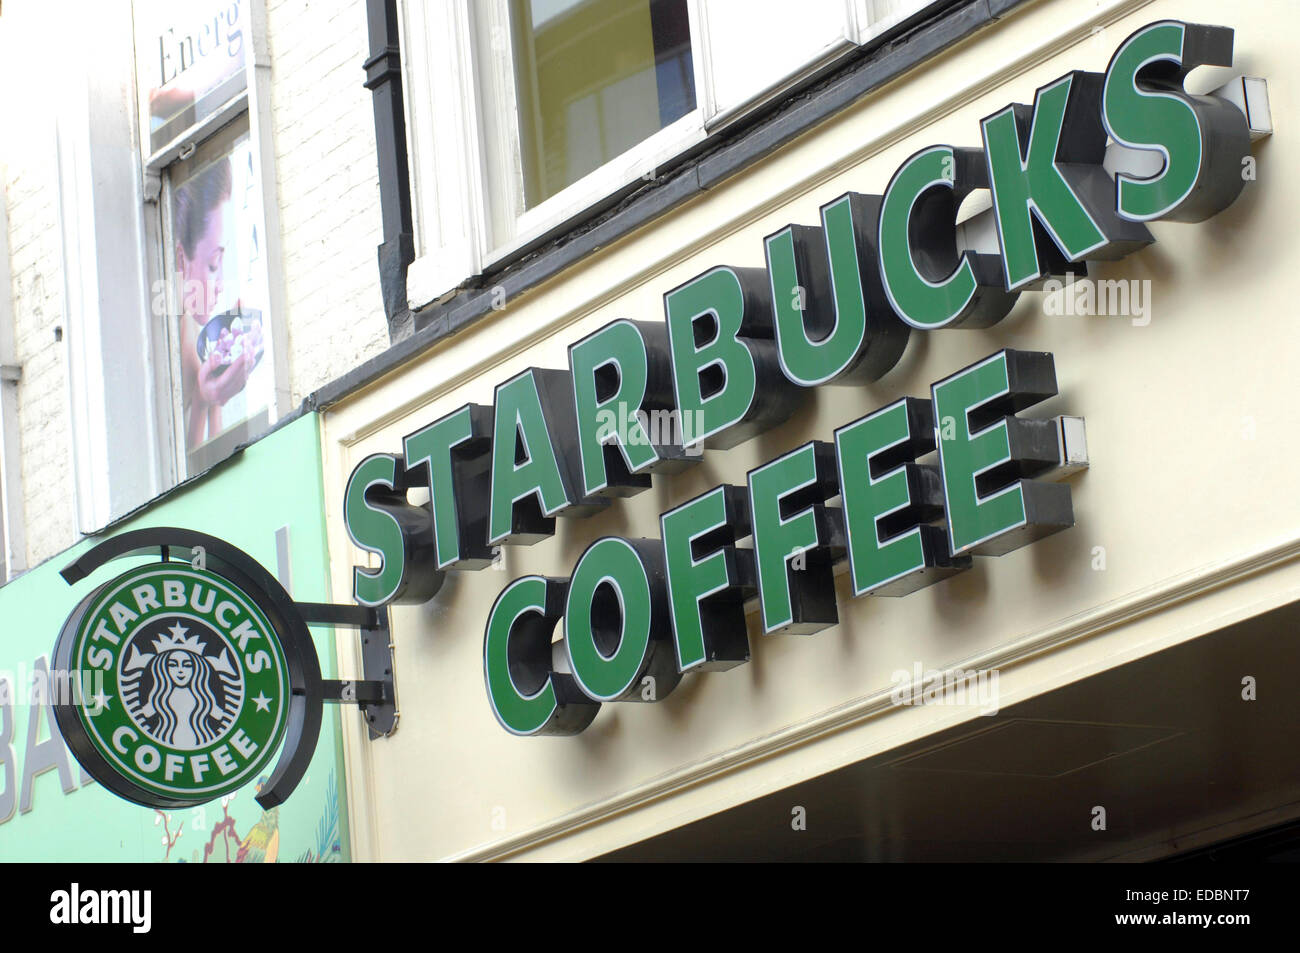 Starbucks coffee shop. Stock Photo